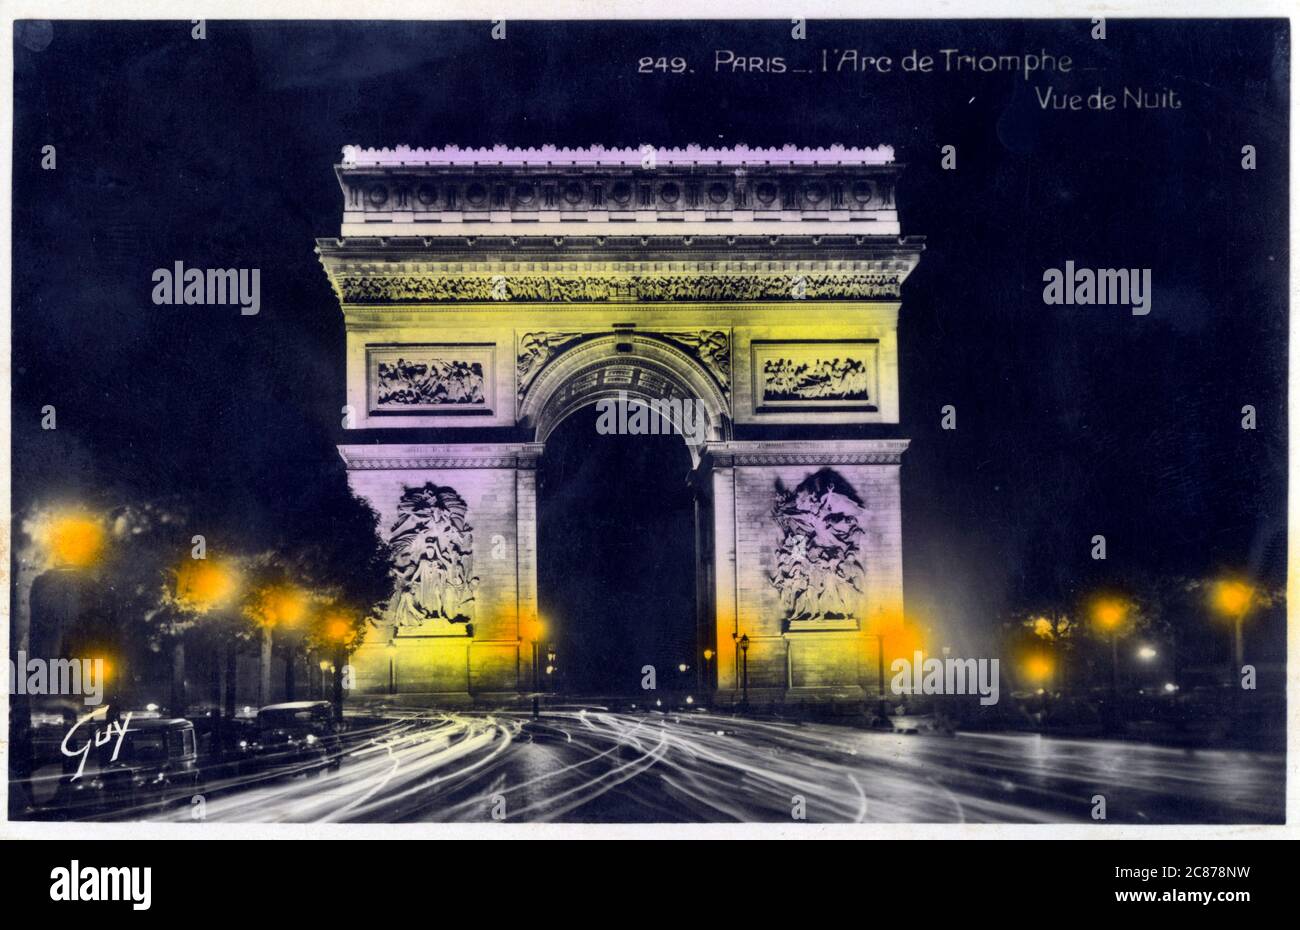 The Arc de Triomphe, Paris, France - photographed at night. Stock Photo